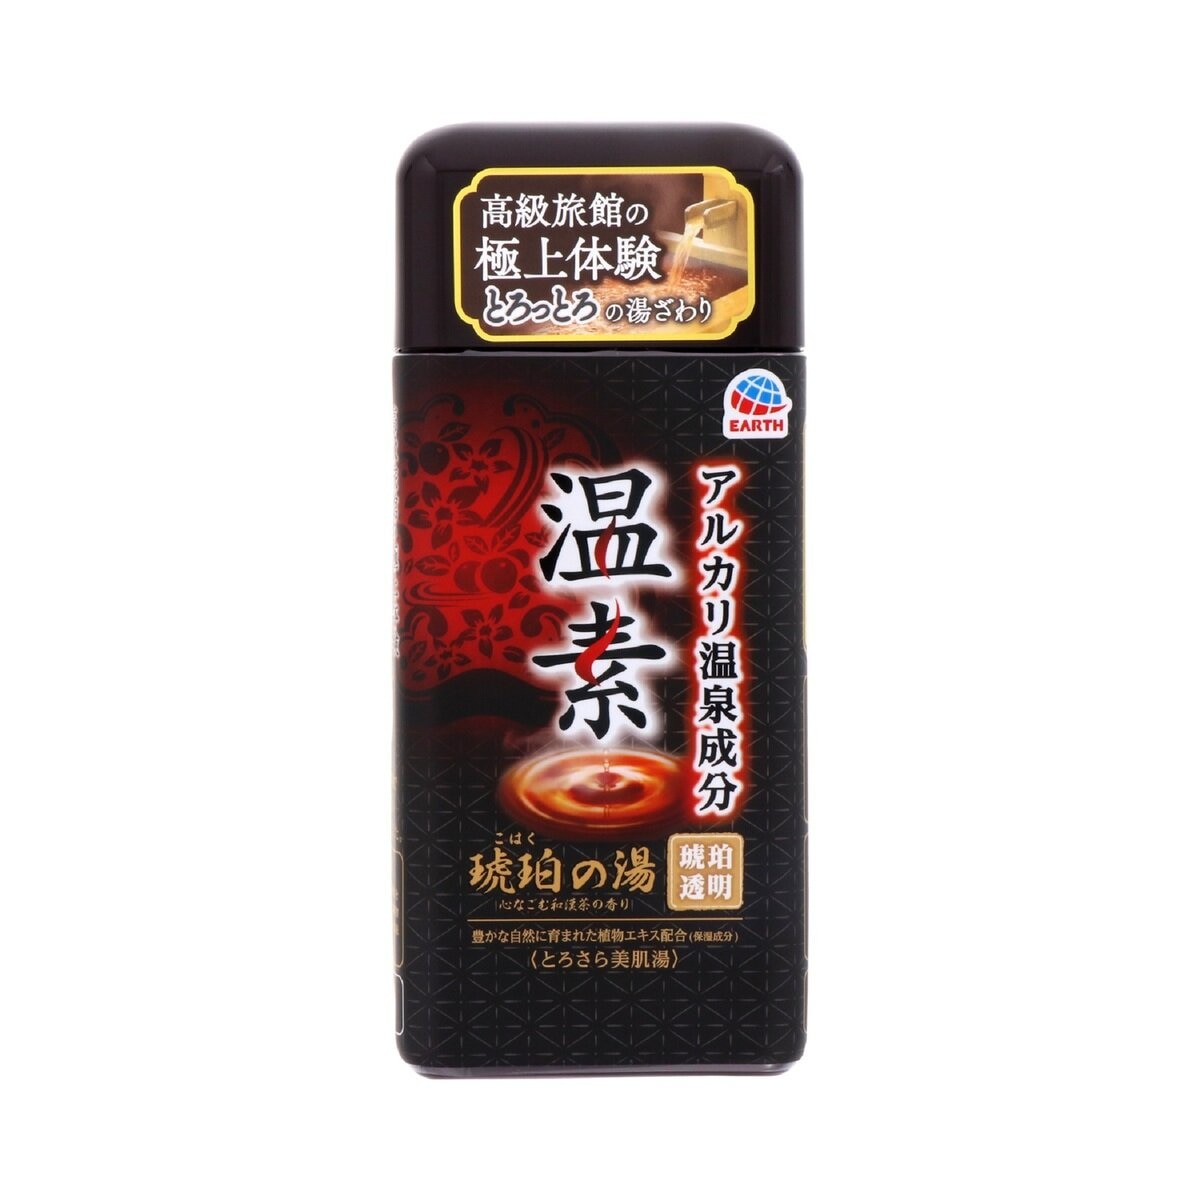 温素 入浴剤 琥珀の湯 600g | Costco Japan